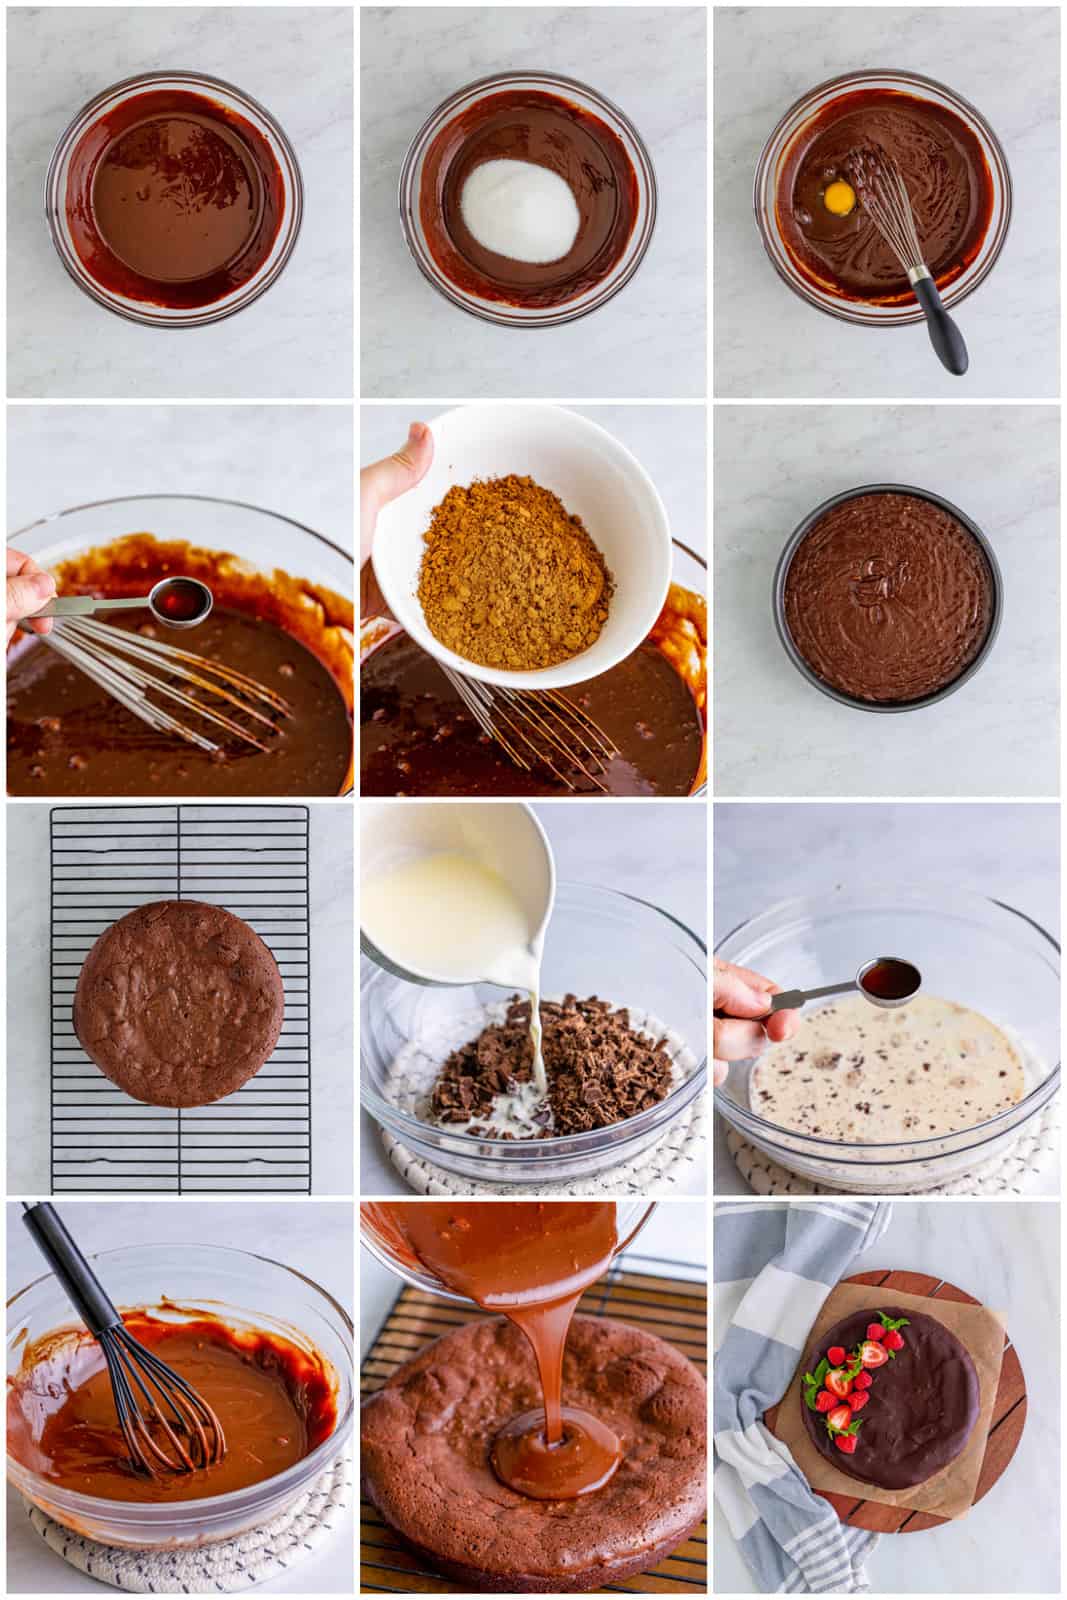 Step by step photos on how to make a Flourless Chocolate Cake.